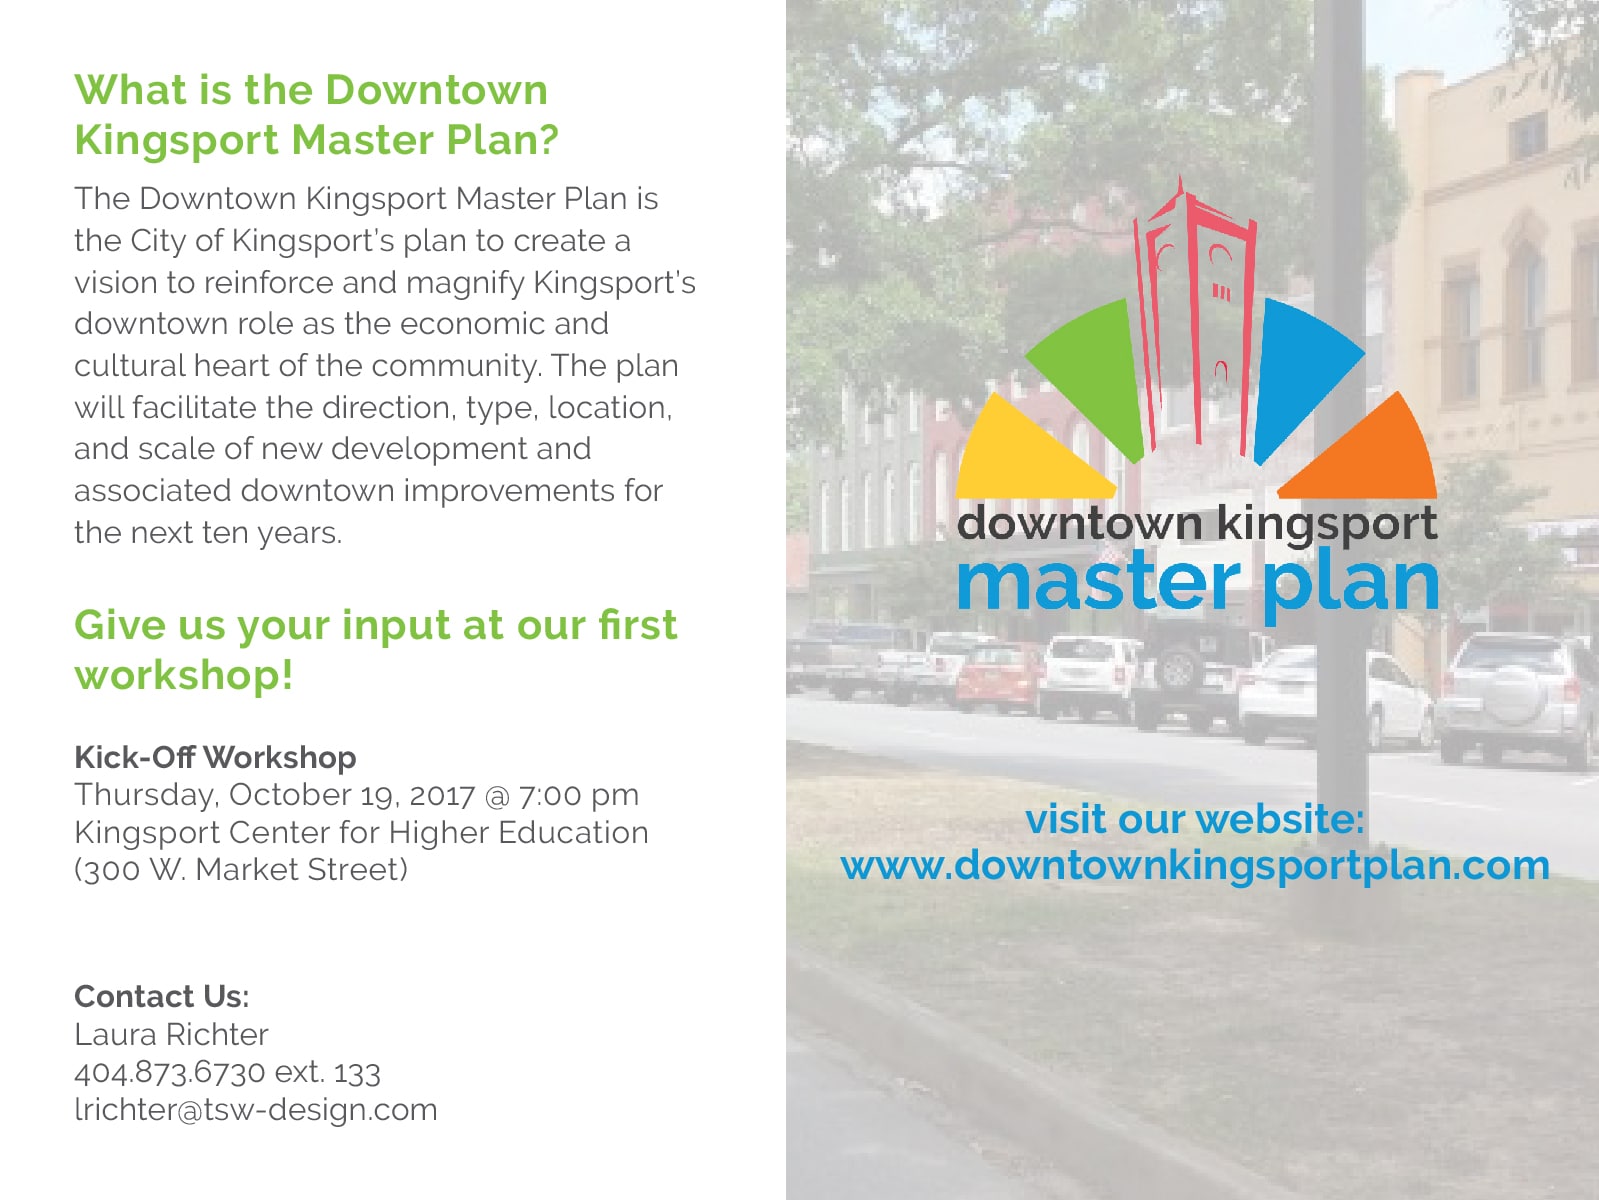 Downtown Kingsport Master Plan Kick-off